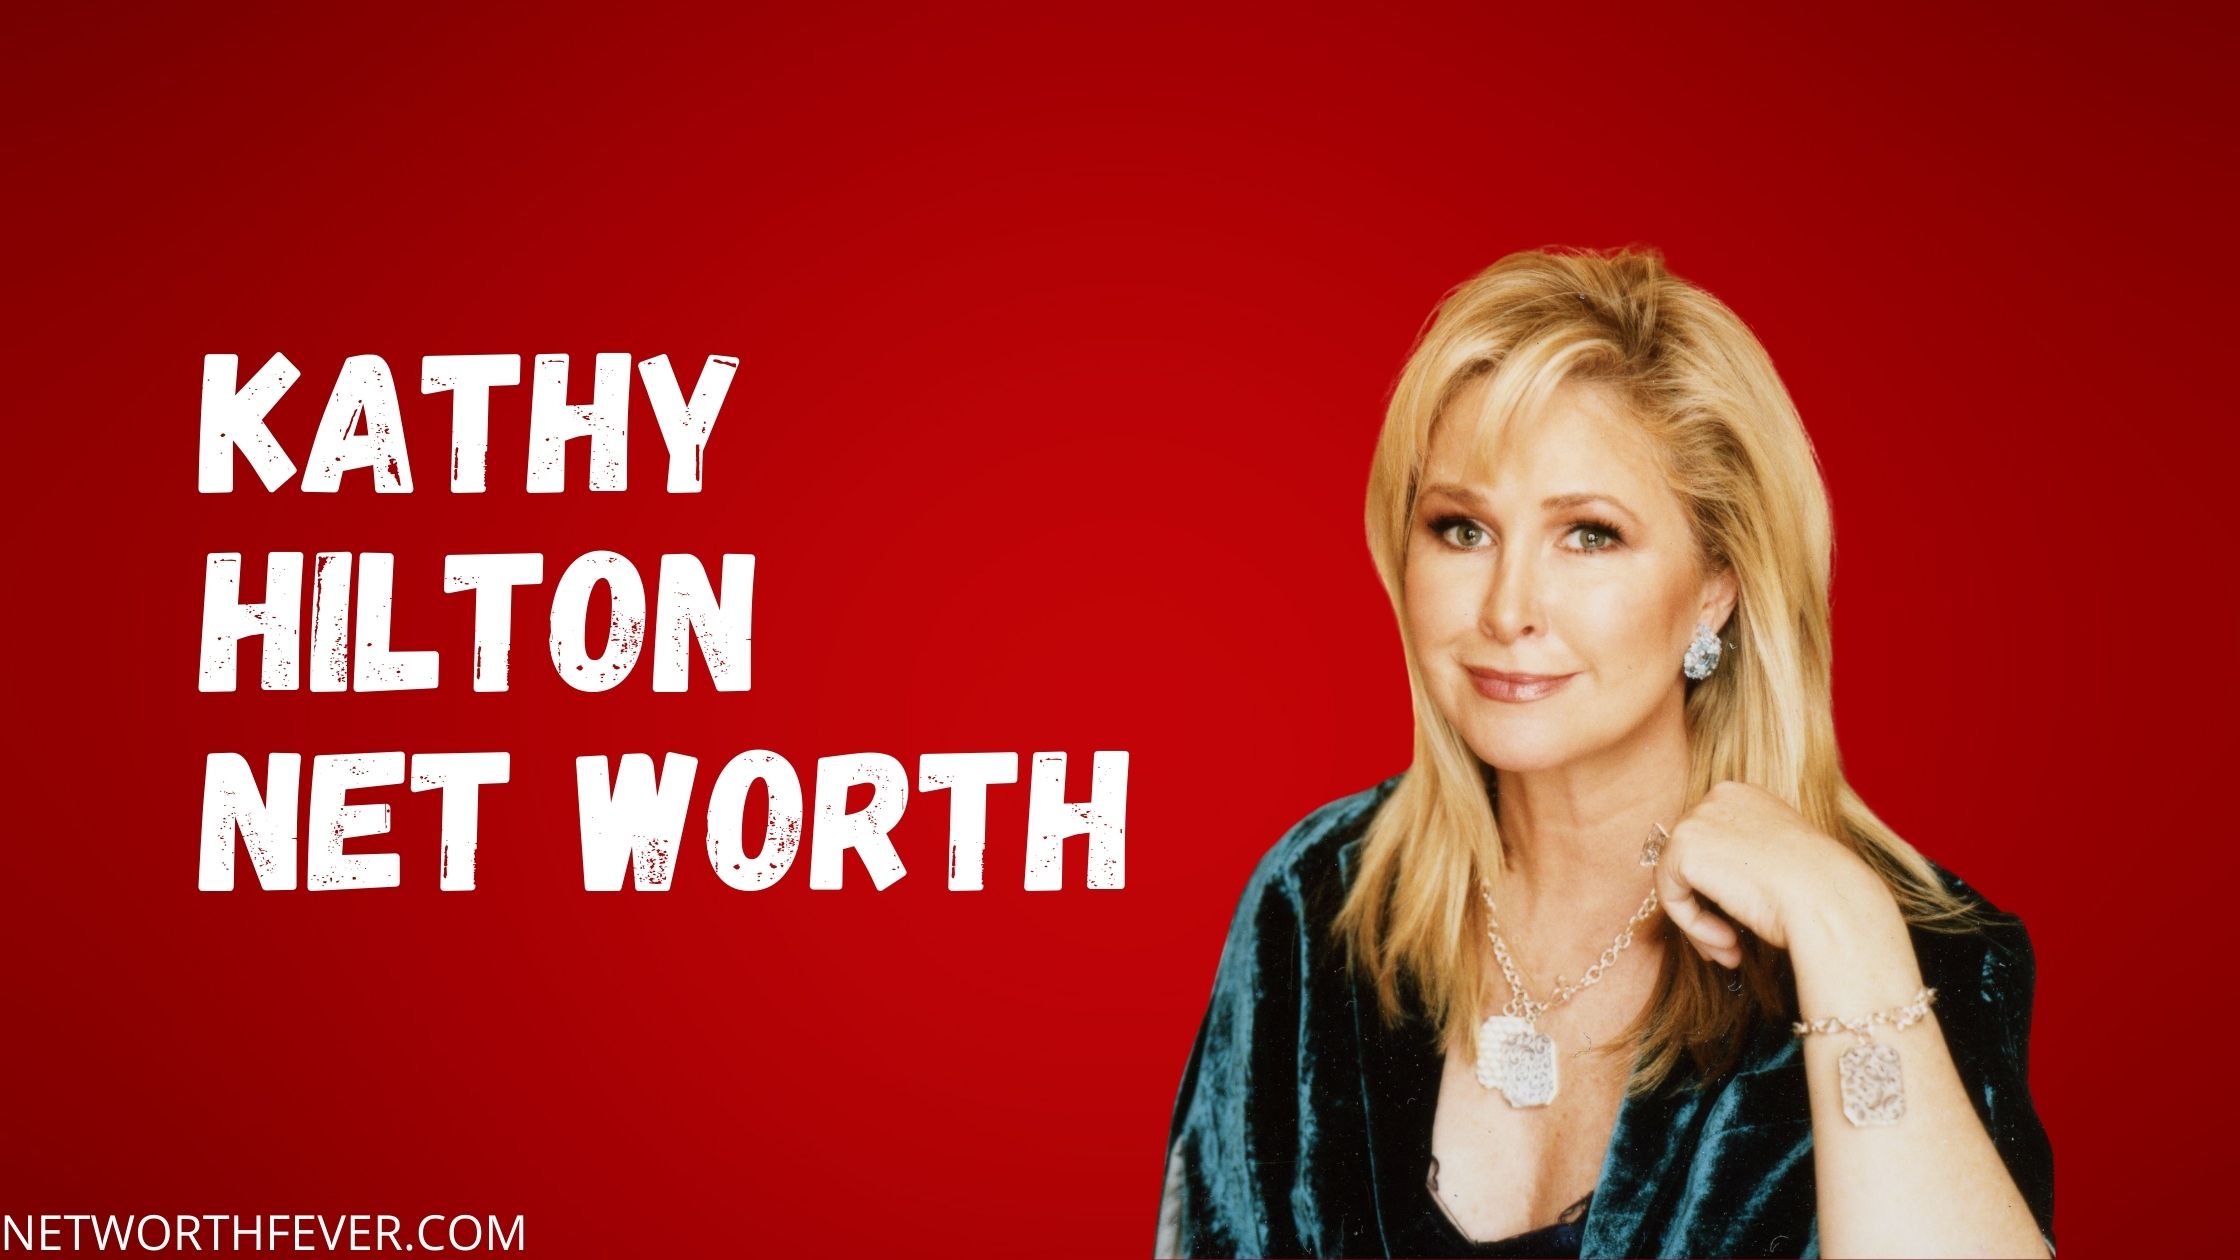 Kathy Hilton Net Worth